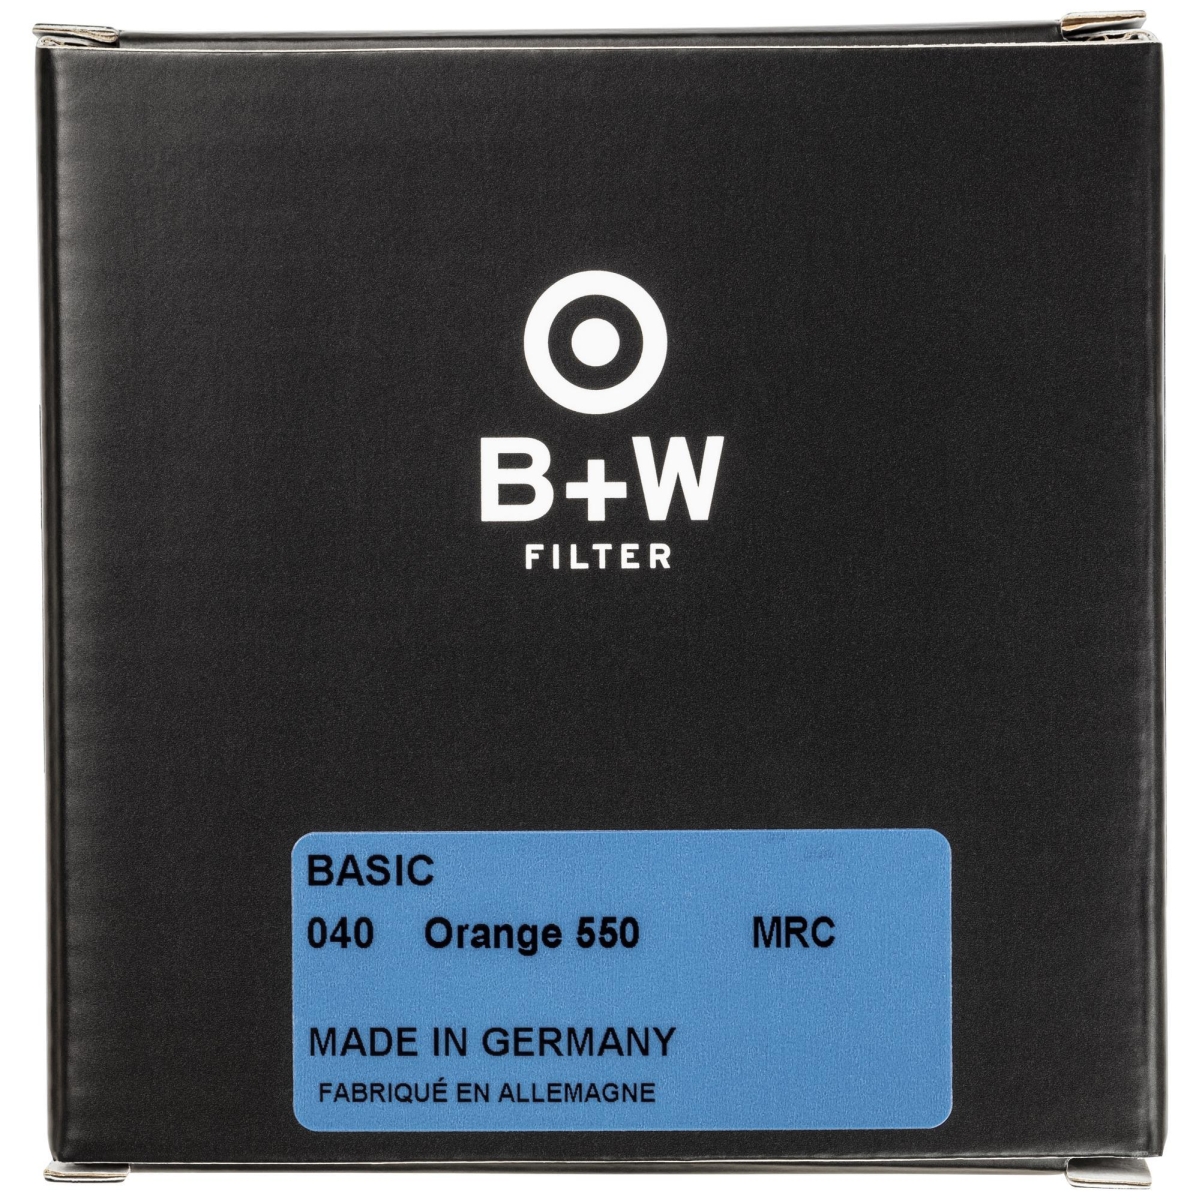 B+W Orange Filter 58 mm 550 MRC Basic